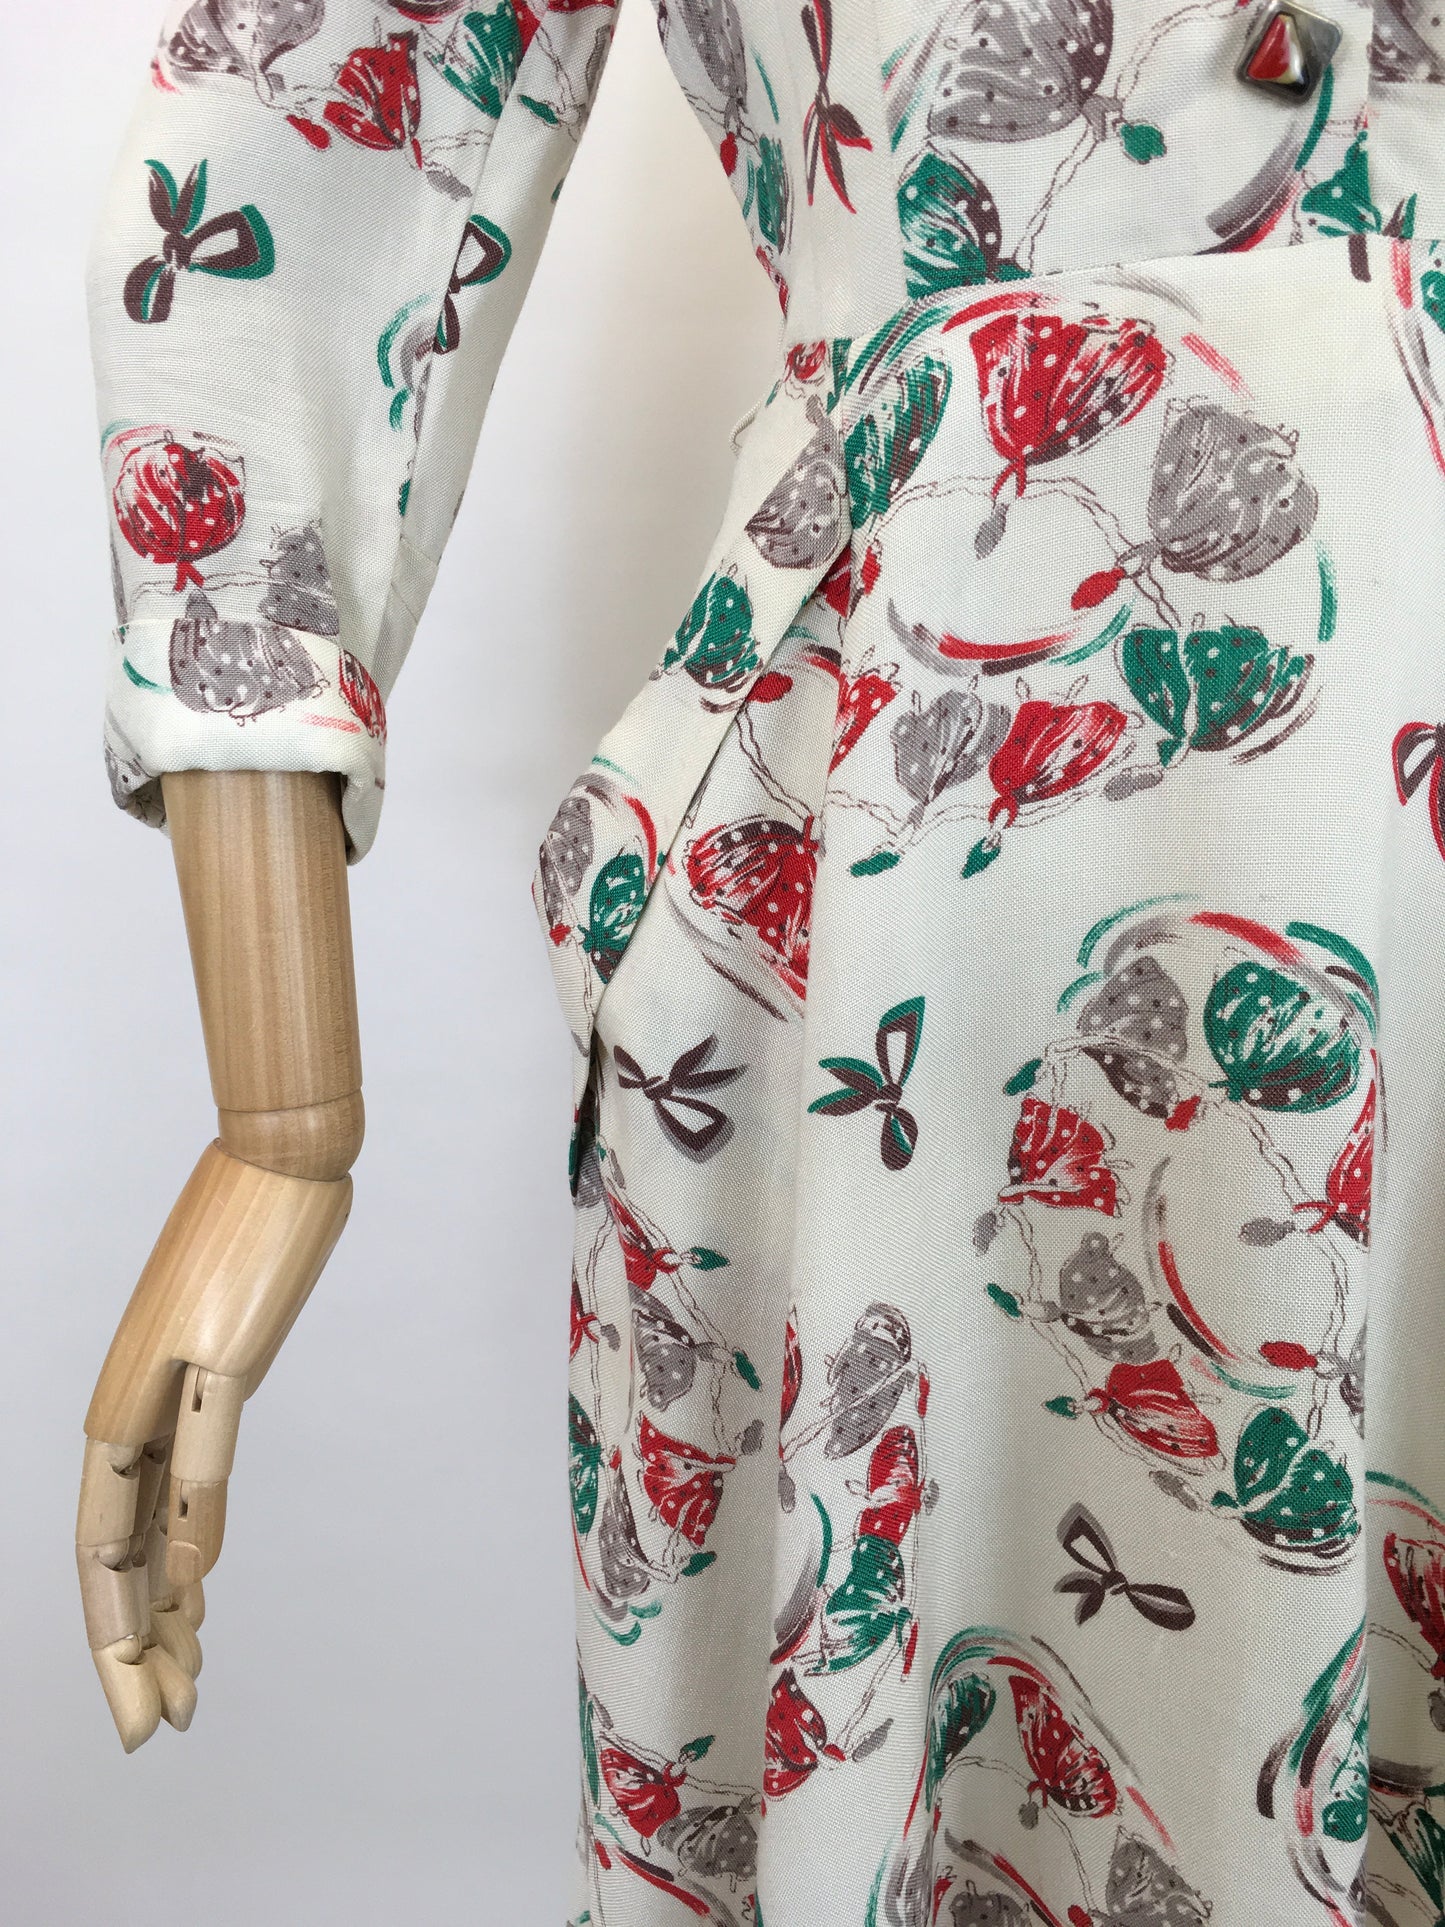 Original 1940’s STUNNING Moygoshal Linen Novelty Print Dress - Featuring Ballerinas and Bows